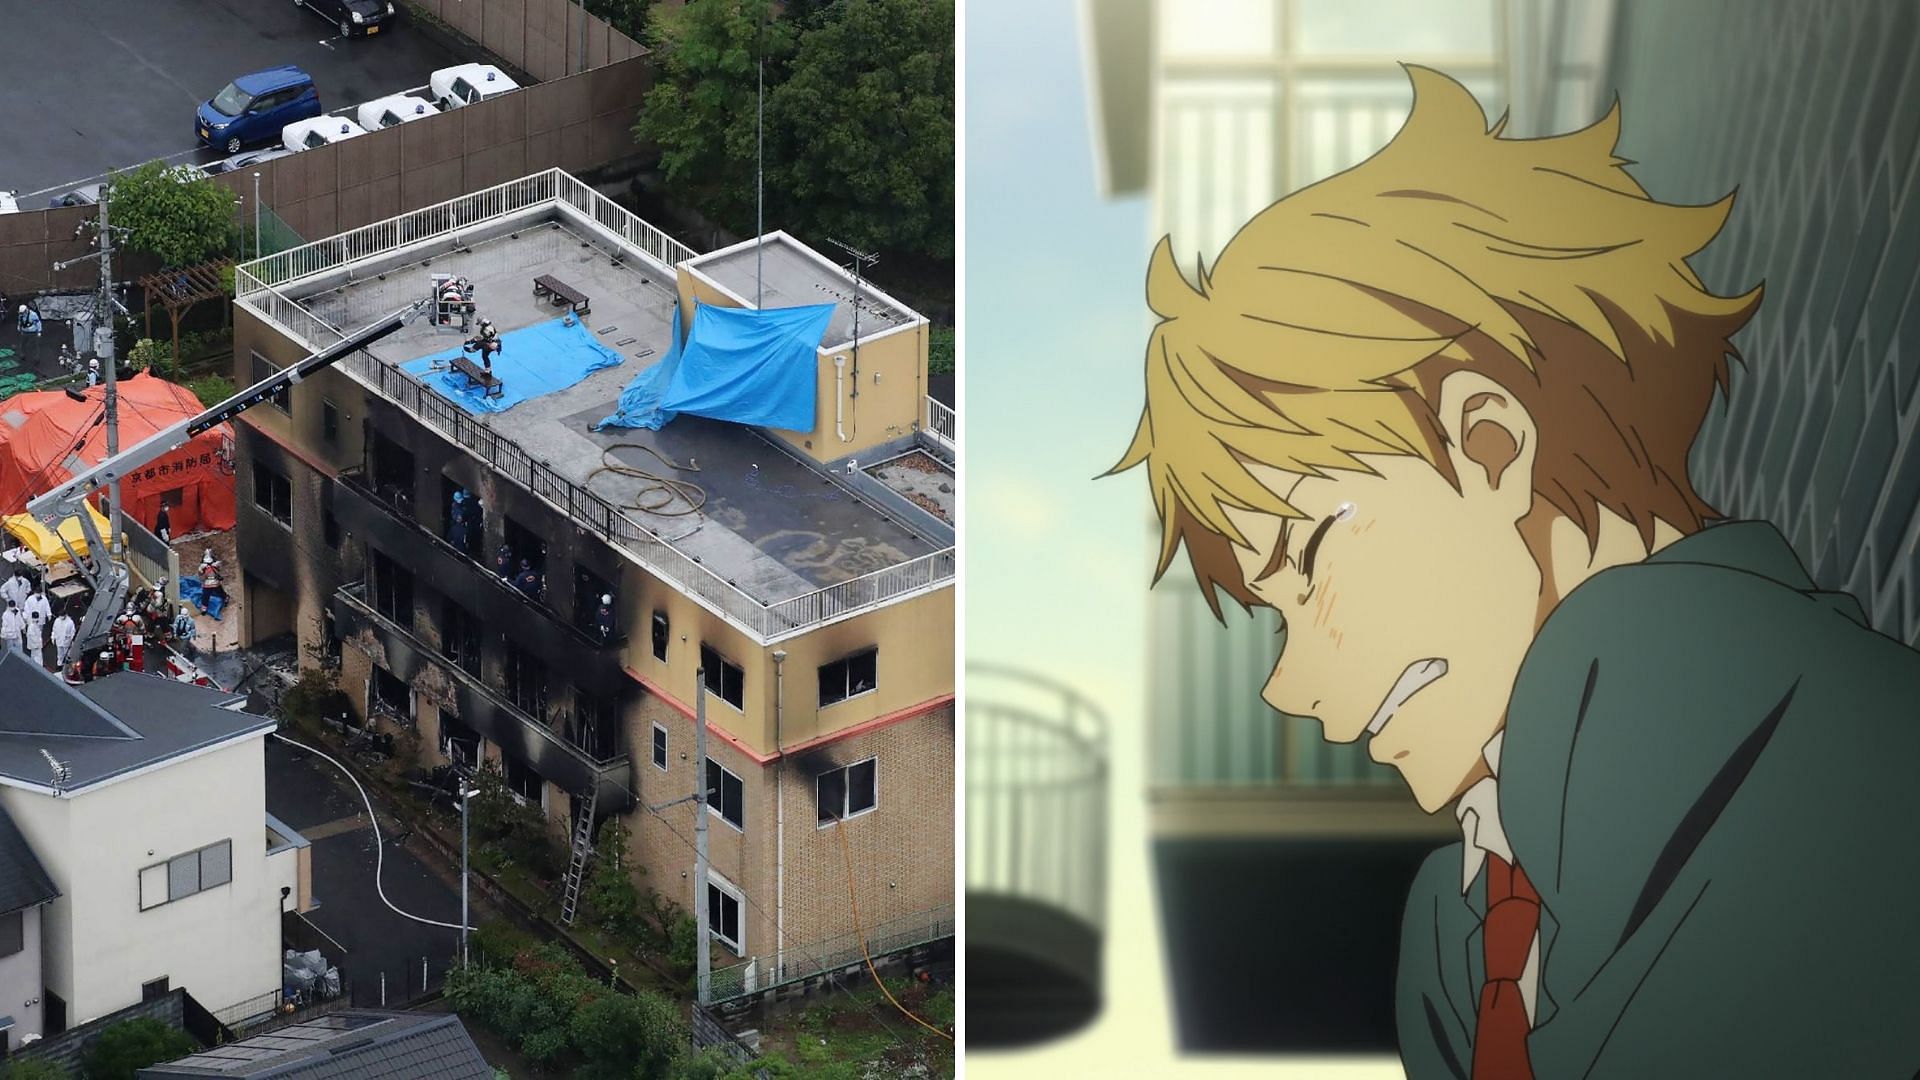 burning building anime